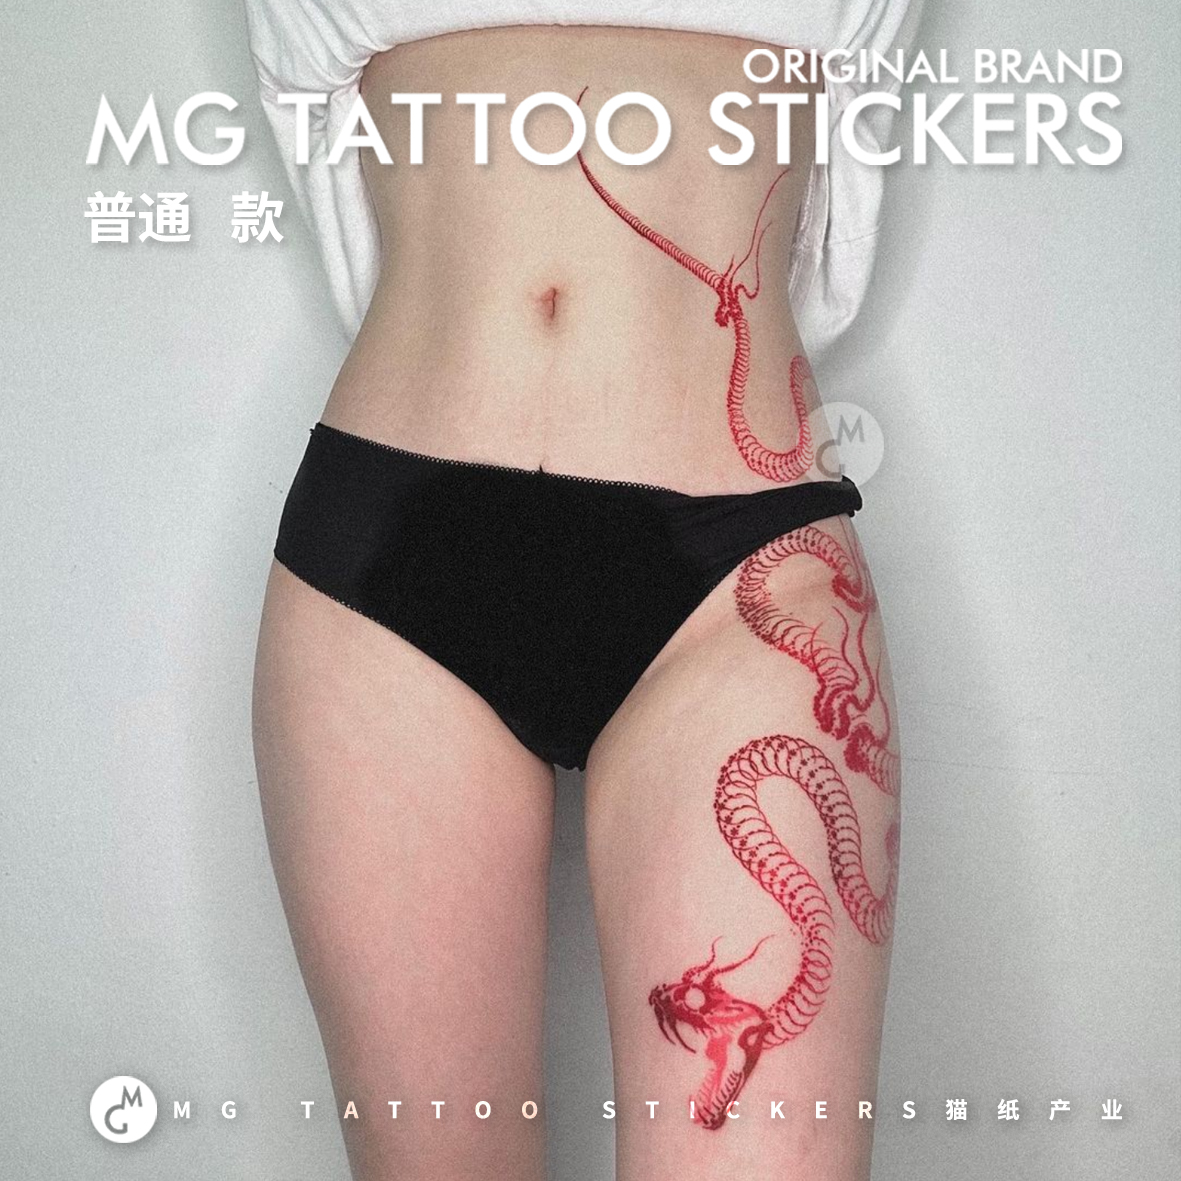 MG tattoo 骨骼艺术 暗黑系蛇骨骼个性火焰大图防水纹身贴纸男女